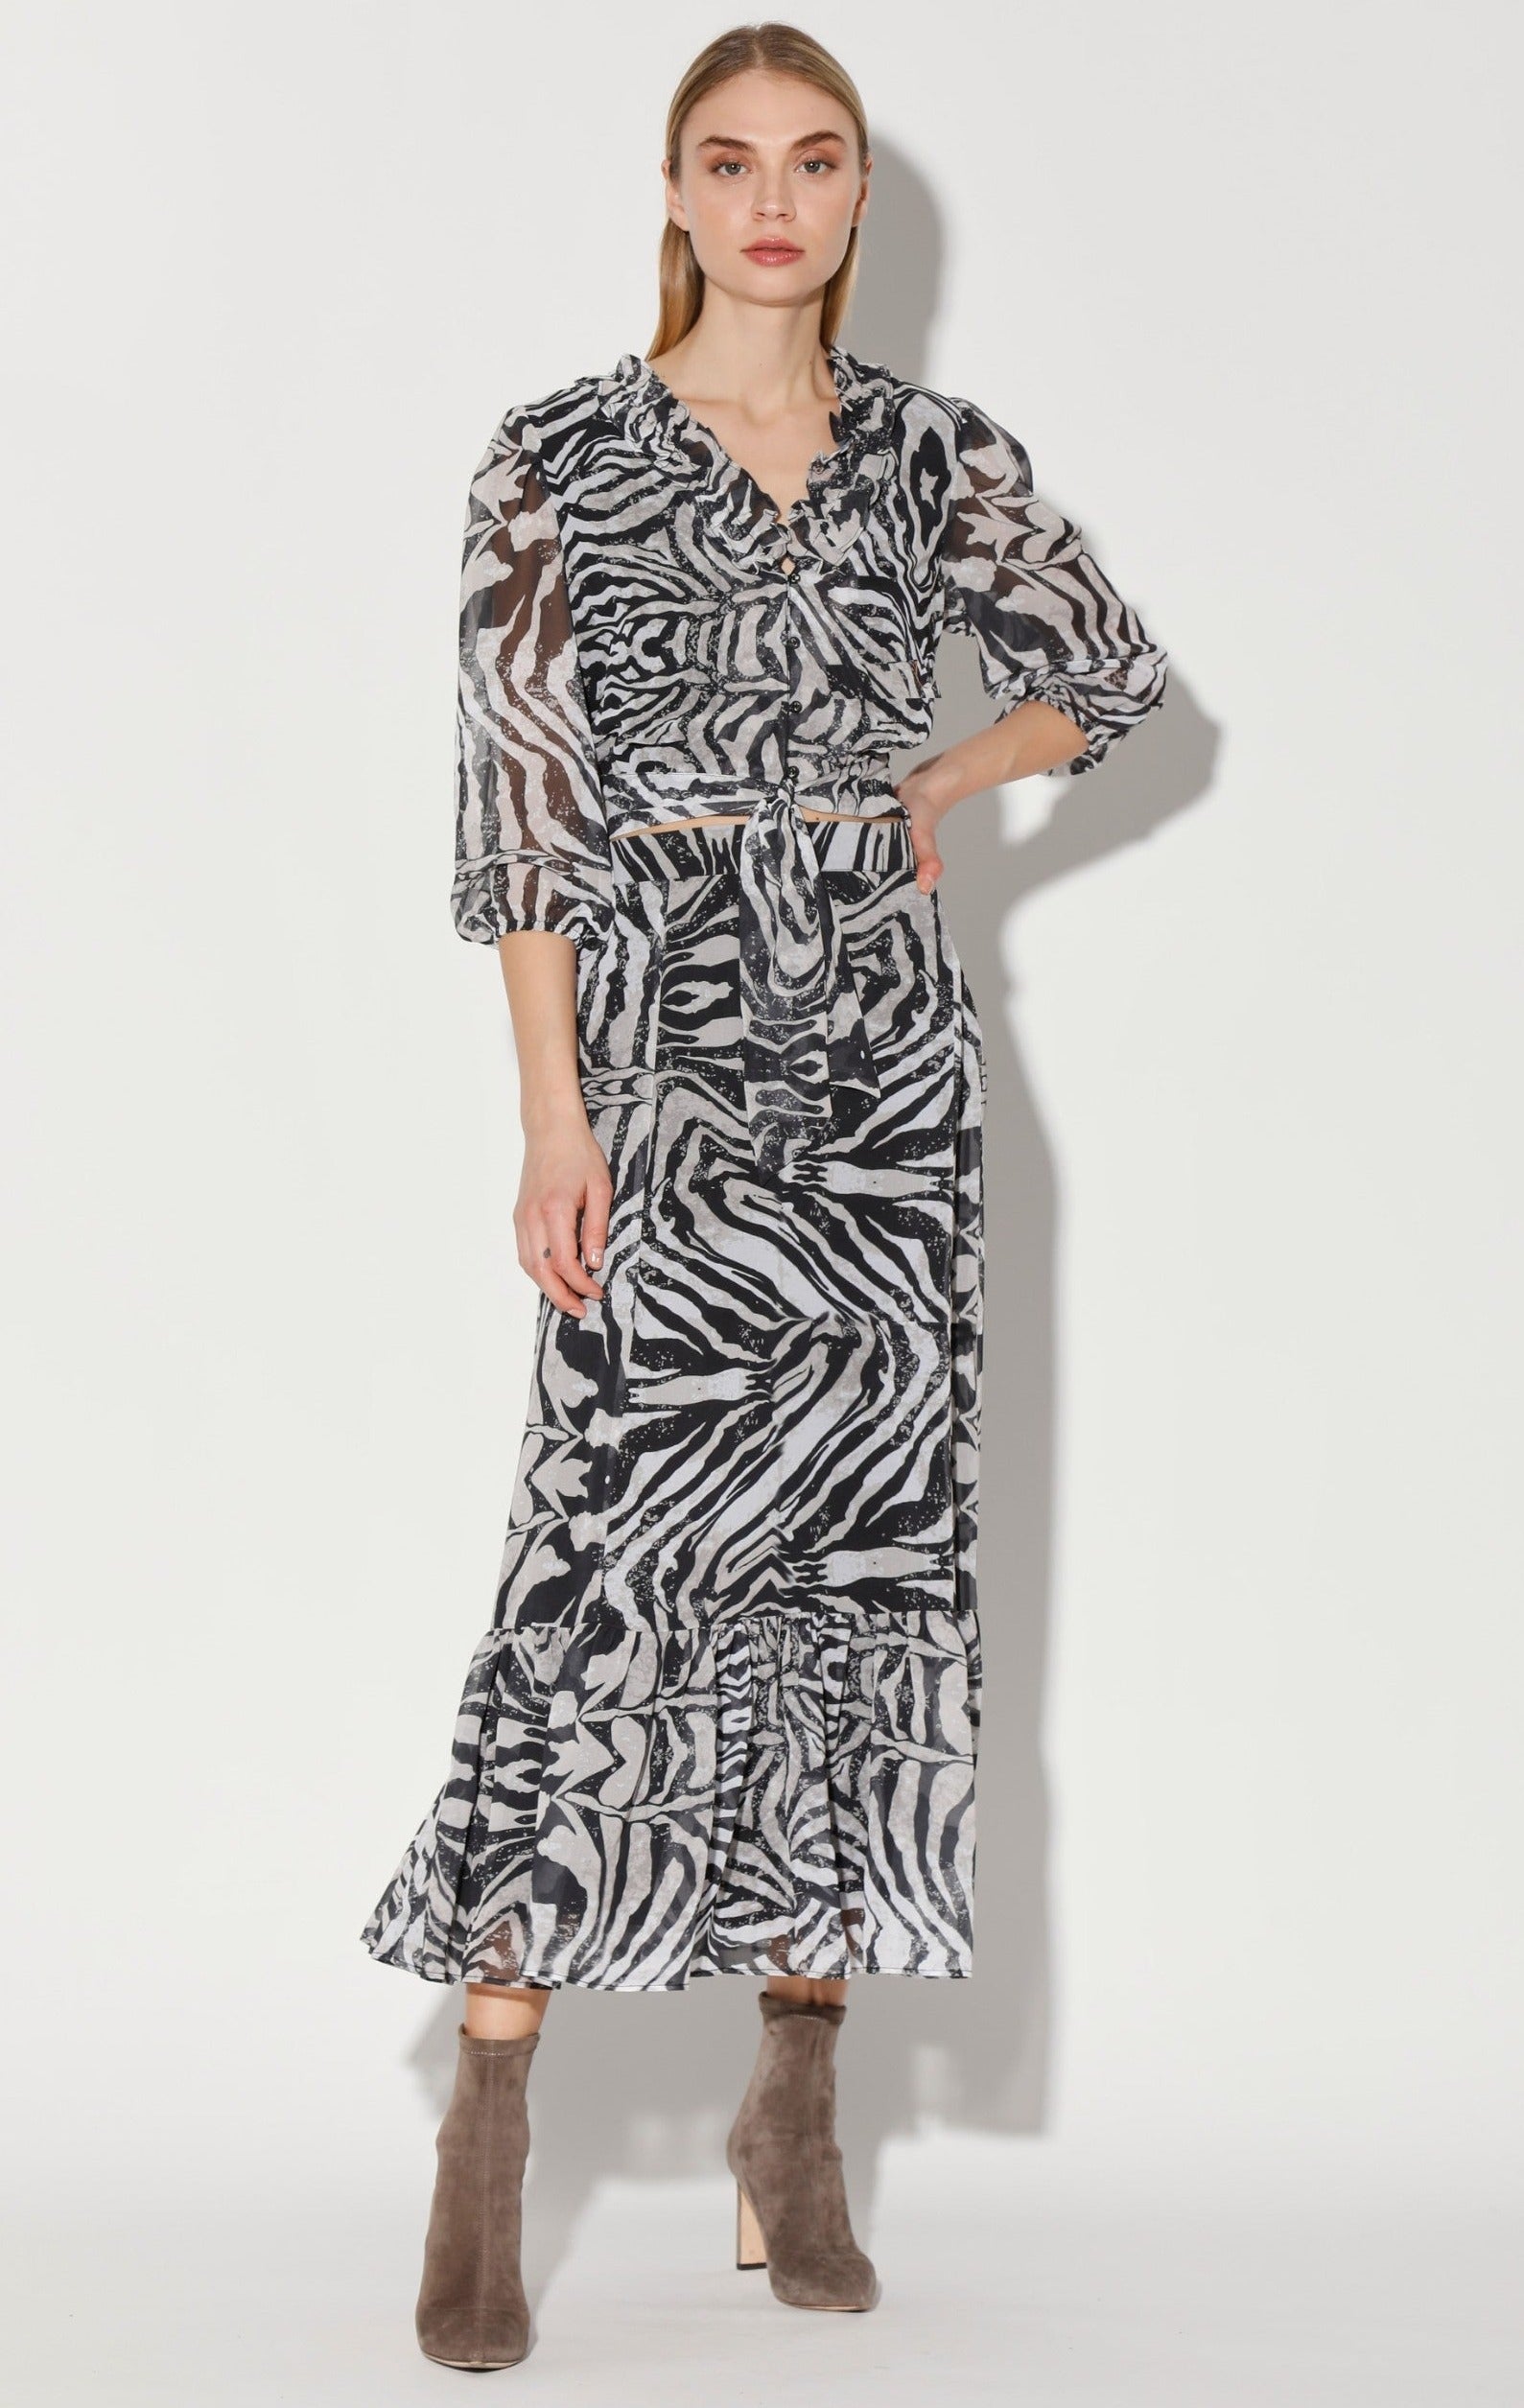 Hilani Skirt, Zebra Batik by Walter Baker